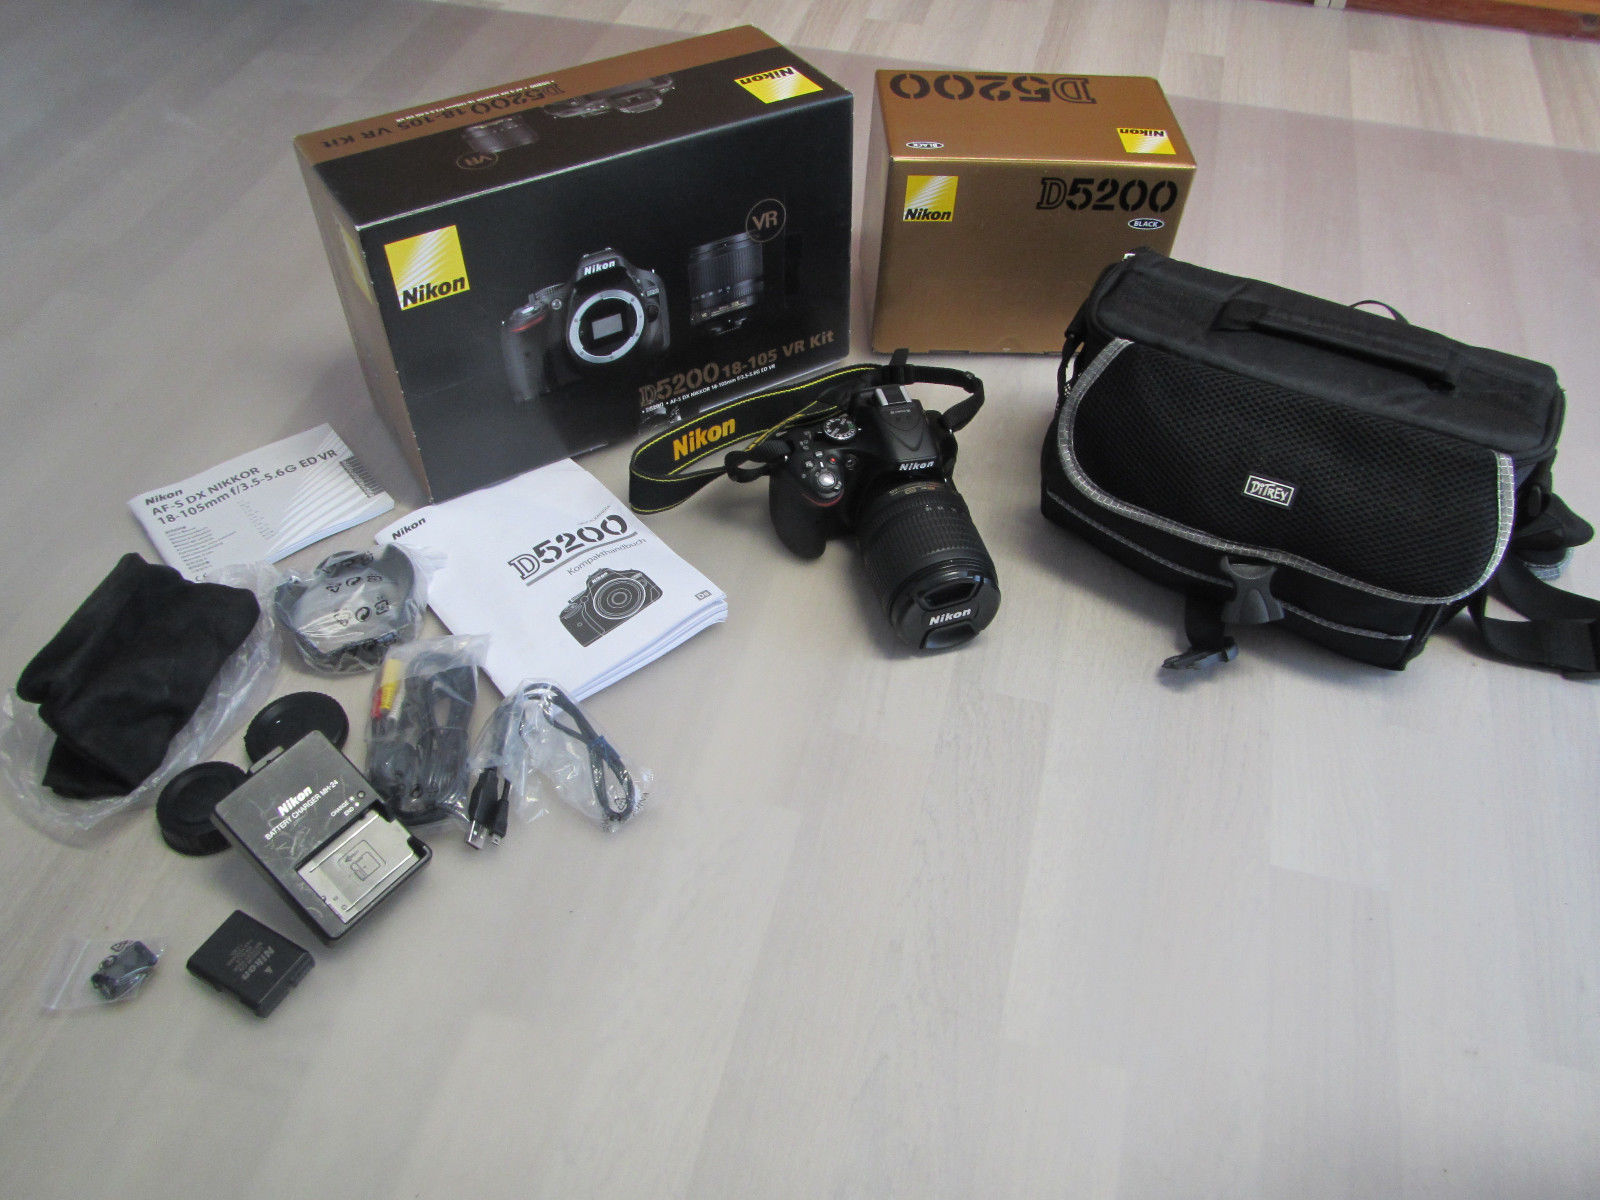 Nikon D5200 Kit mit 18-105mm Objektiv - digitale Spiegelreflexkamera TOP mit OVP